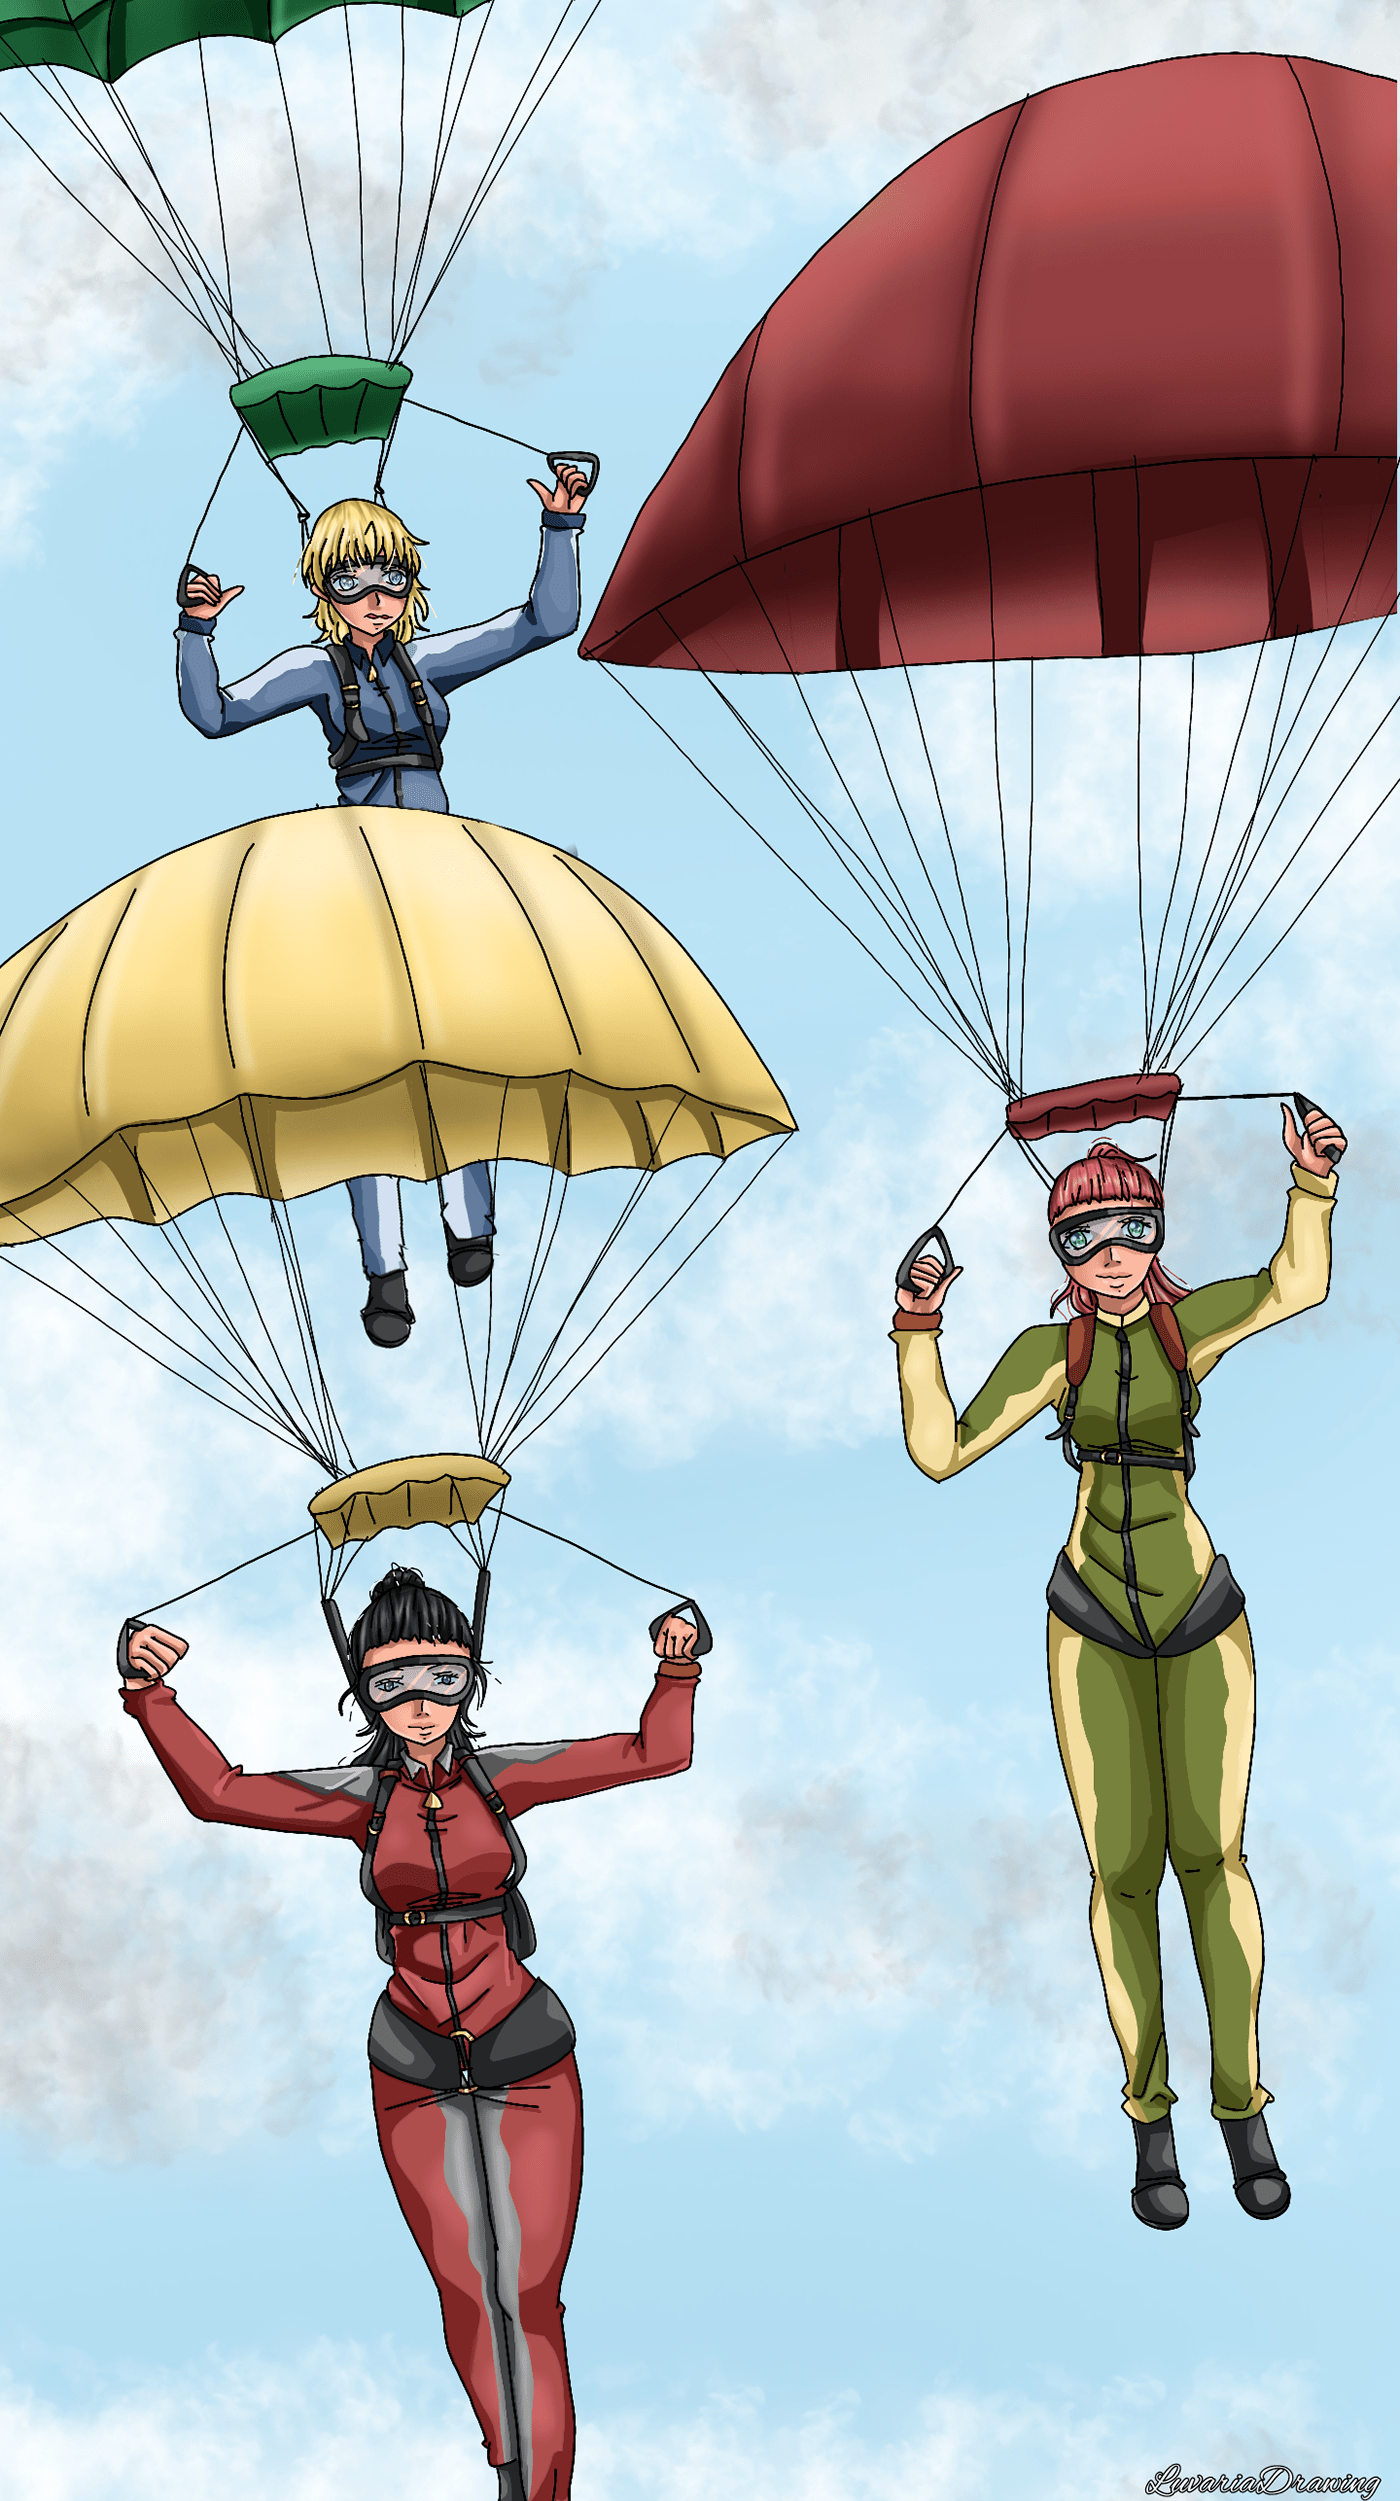 Aelita Schaeffer altimètres Code Lyoko dargaud Eva Skinner parachutes skydiveoutfits skydivers Skydiving Yumi Ishiyama